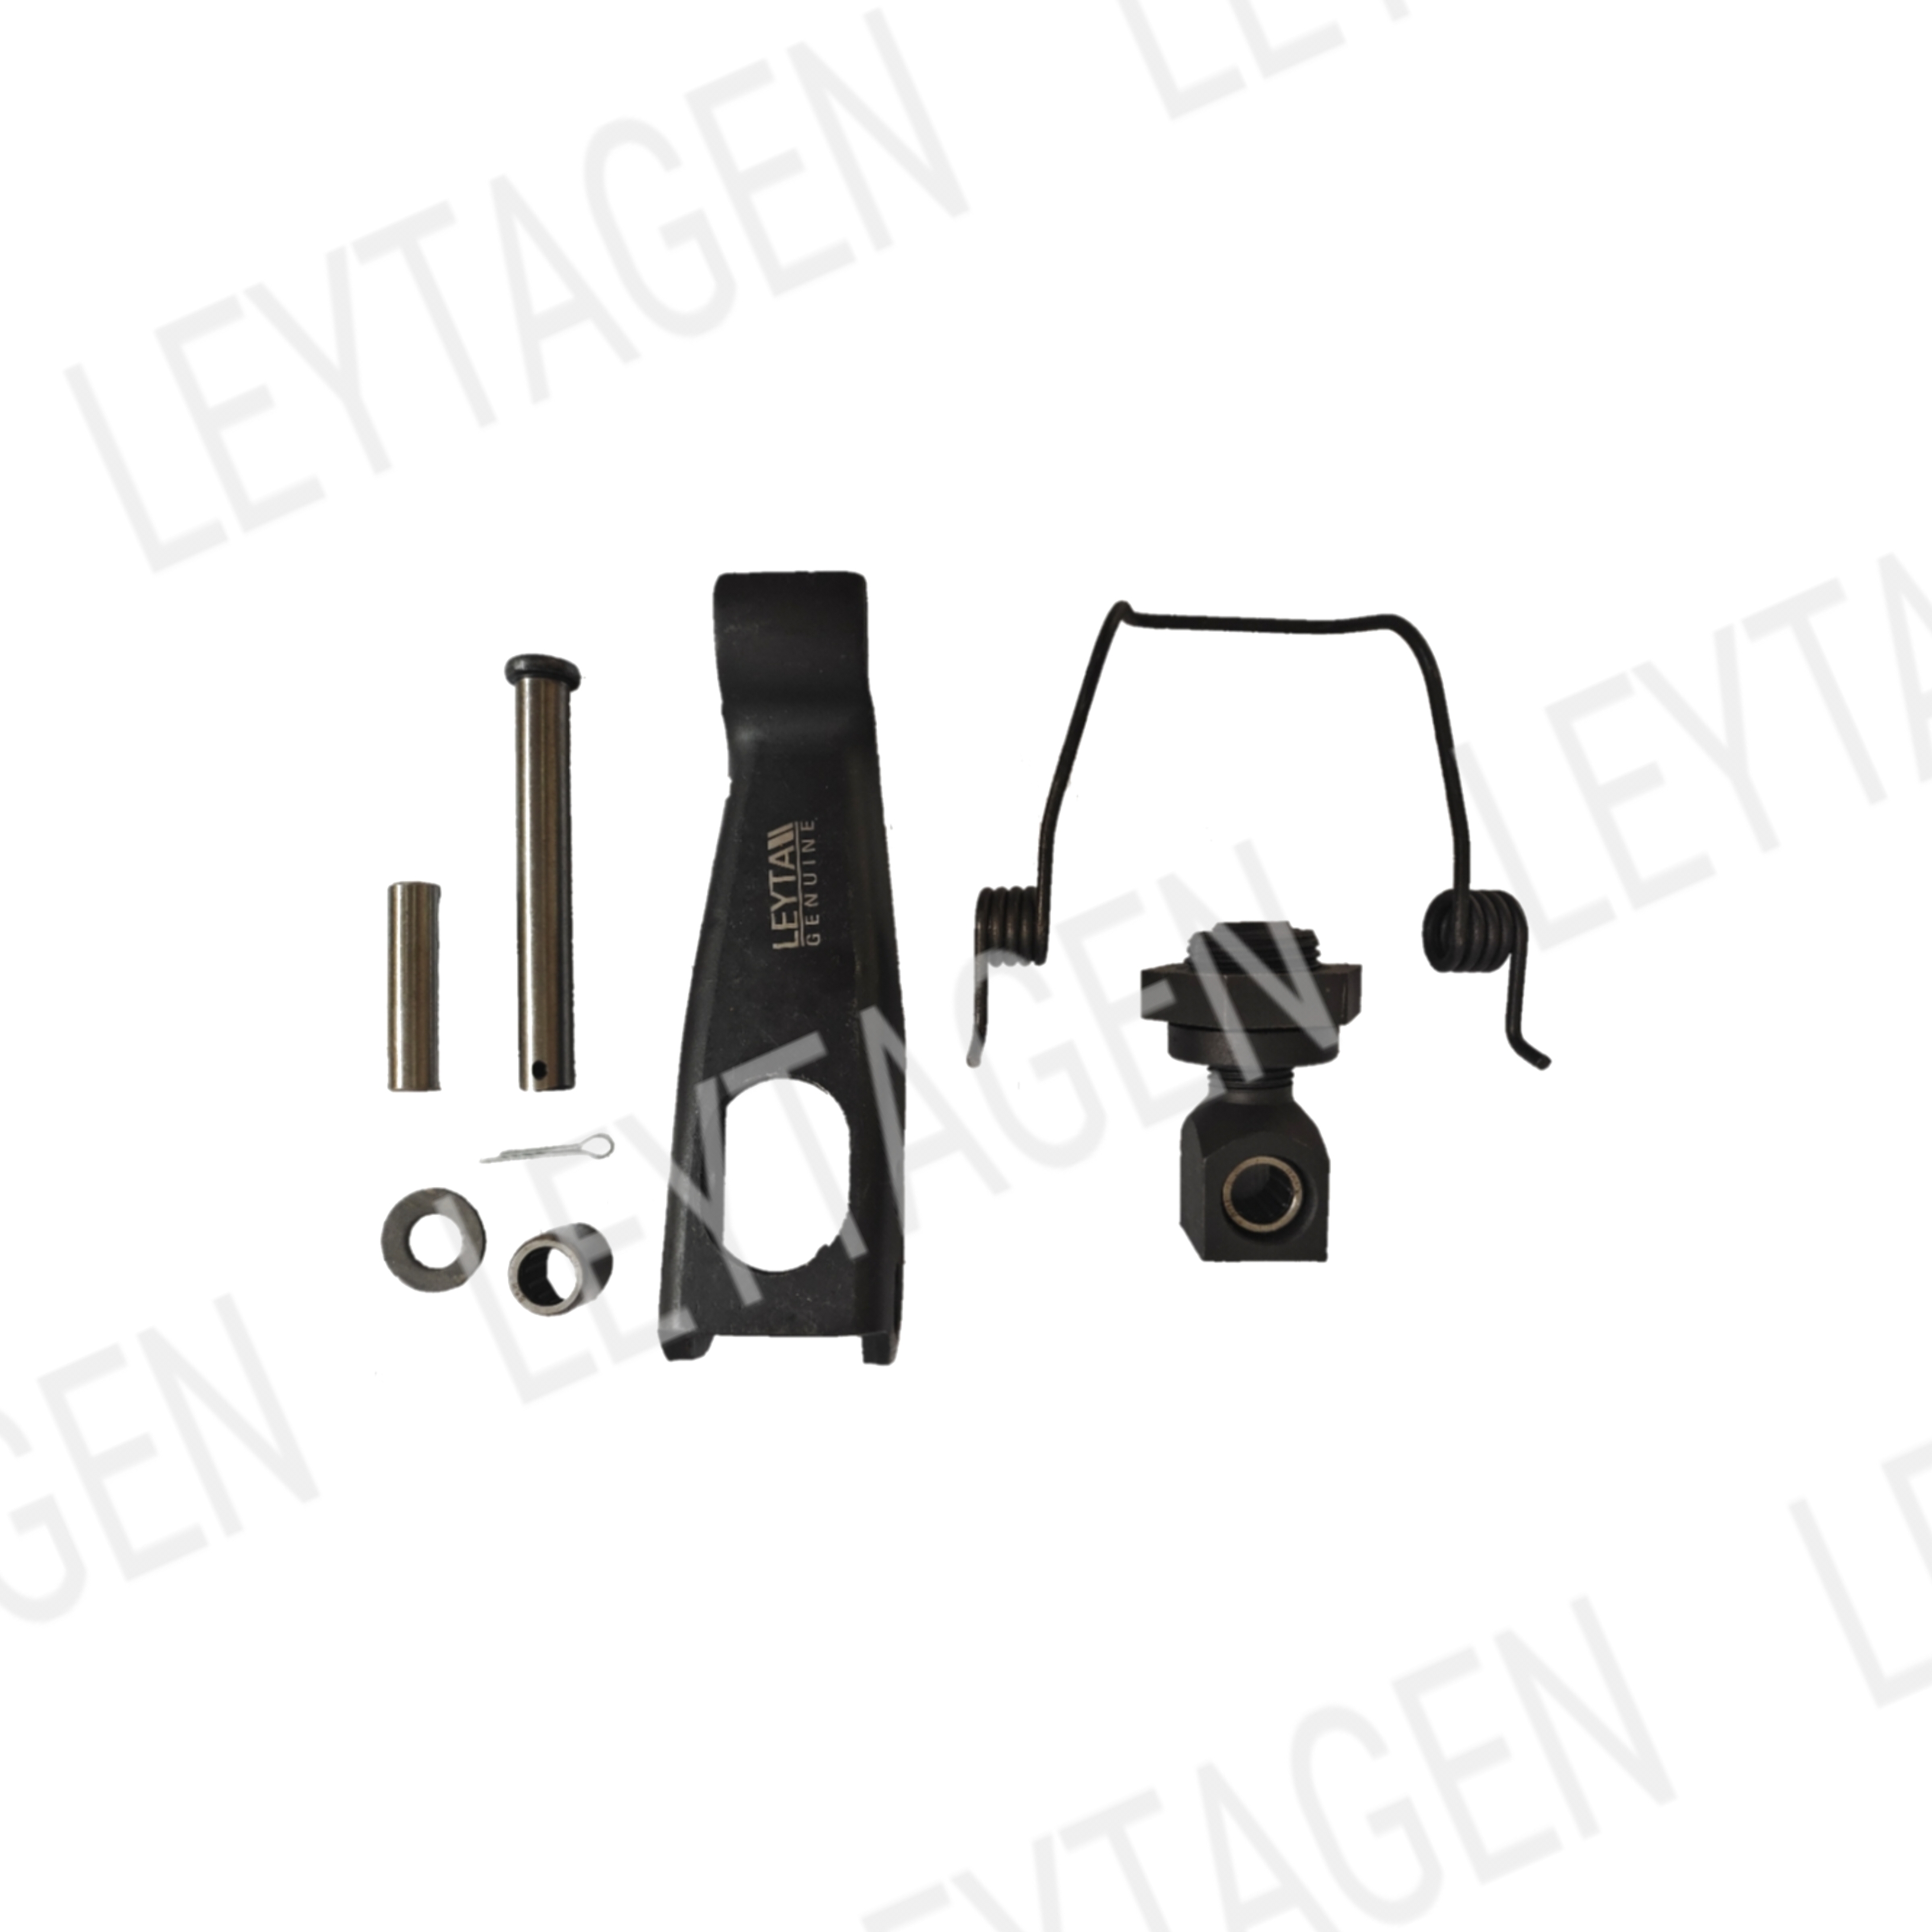 GB 60 LEVER KIT WITH BEARING (LG/CAK352/LKWB/022)